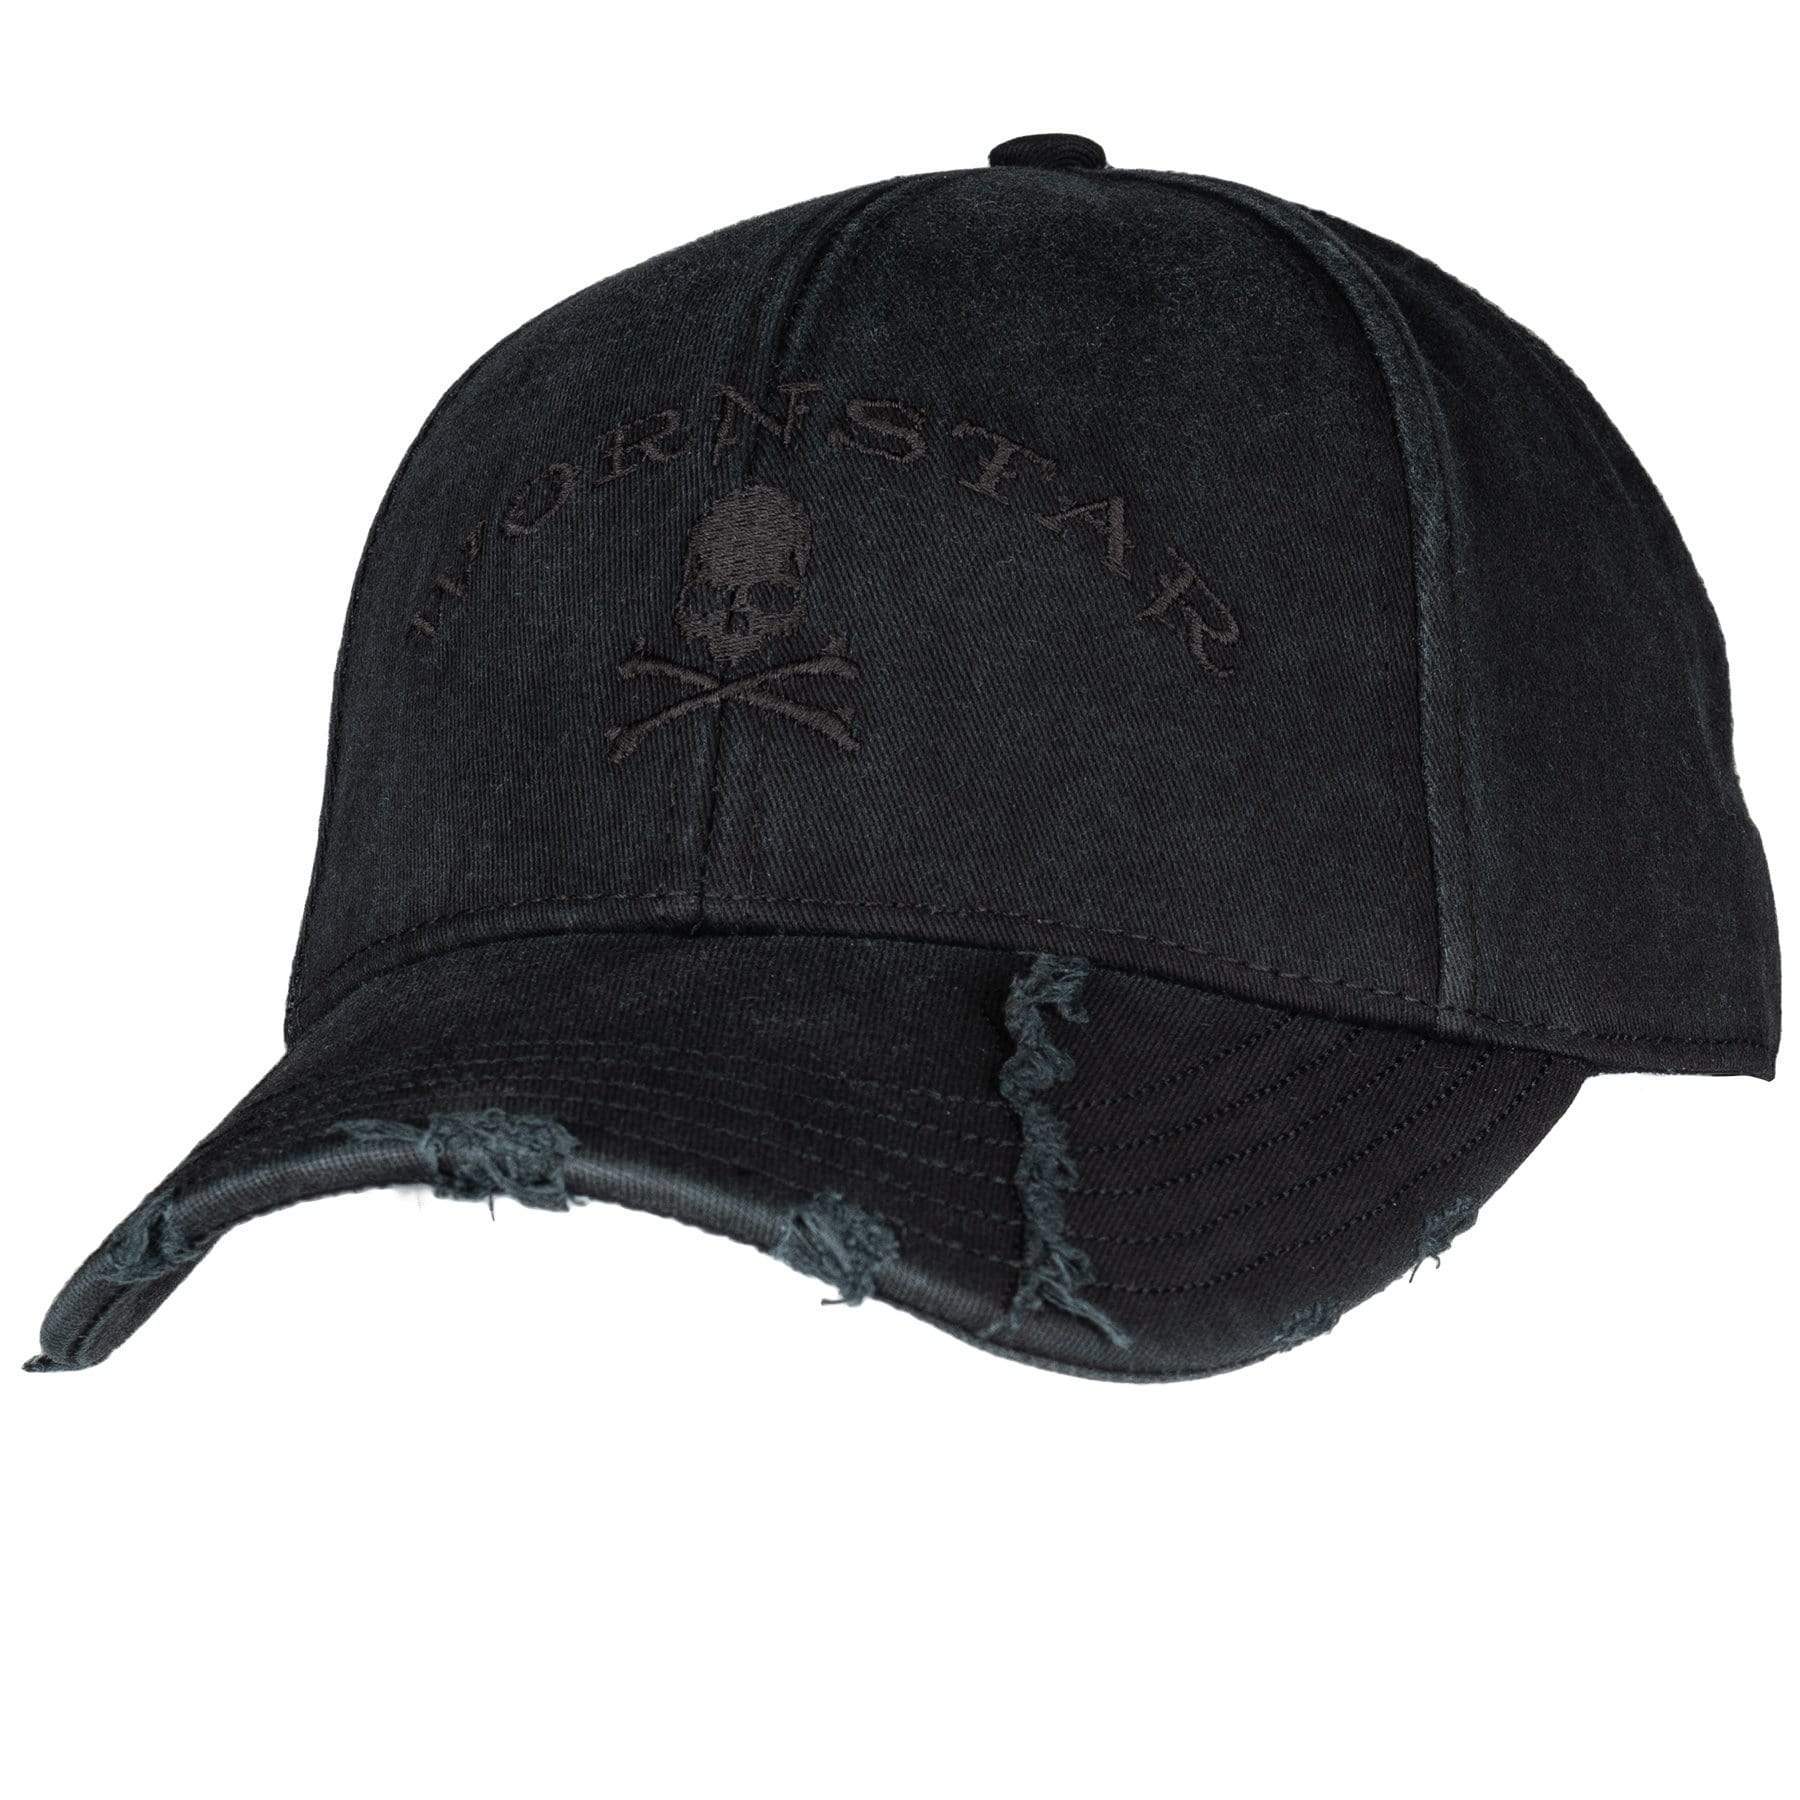 Wornstar Clothing Baseball Hat. Raider Trucker Hat - Black